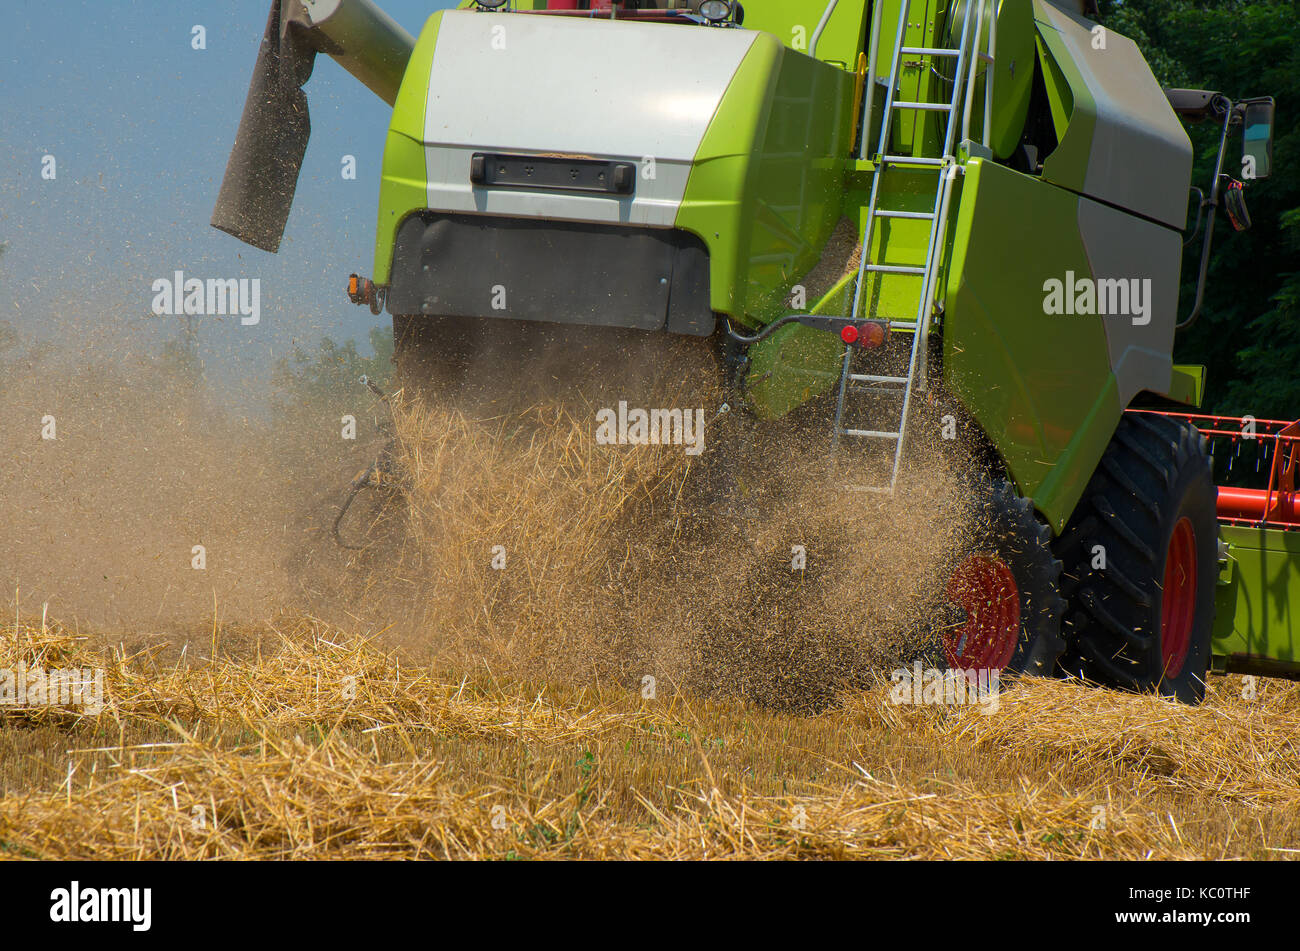 Grain harvesting with combine harvester Stock Photo